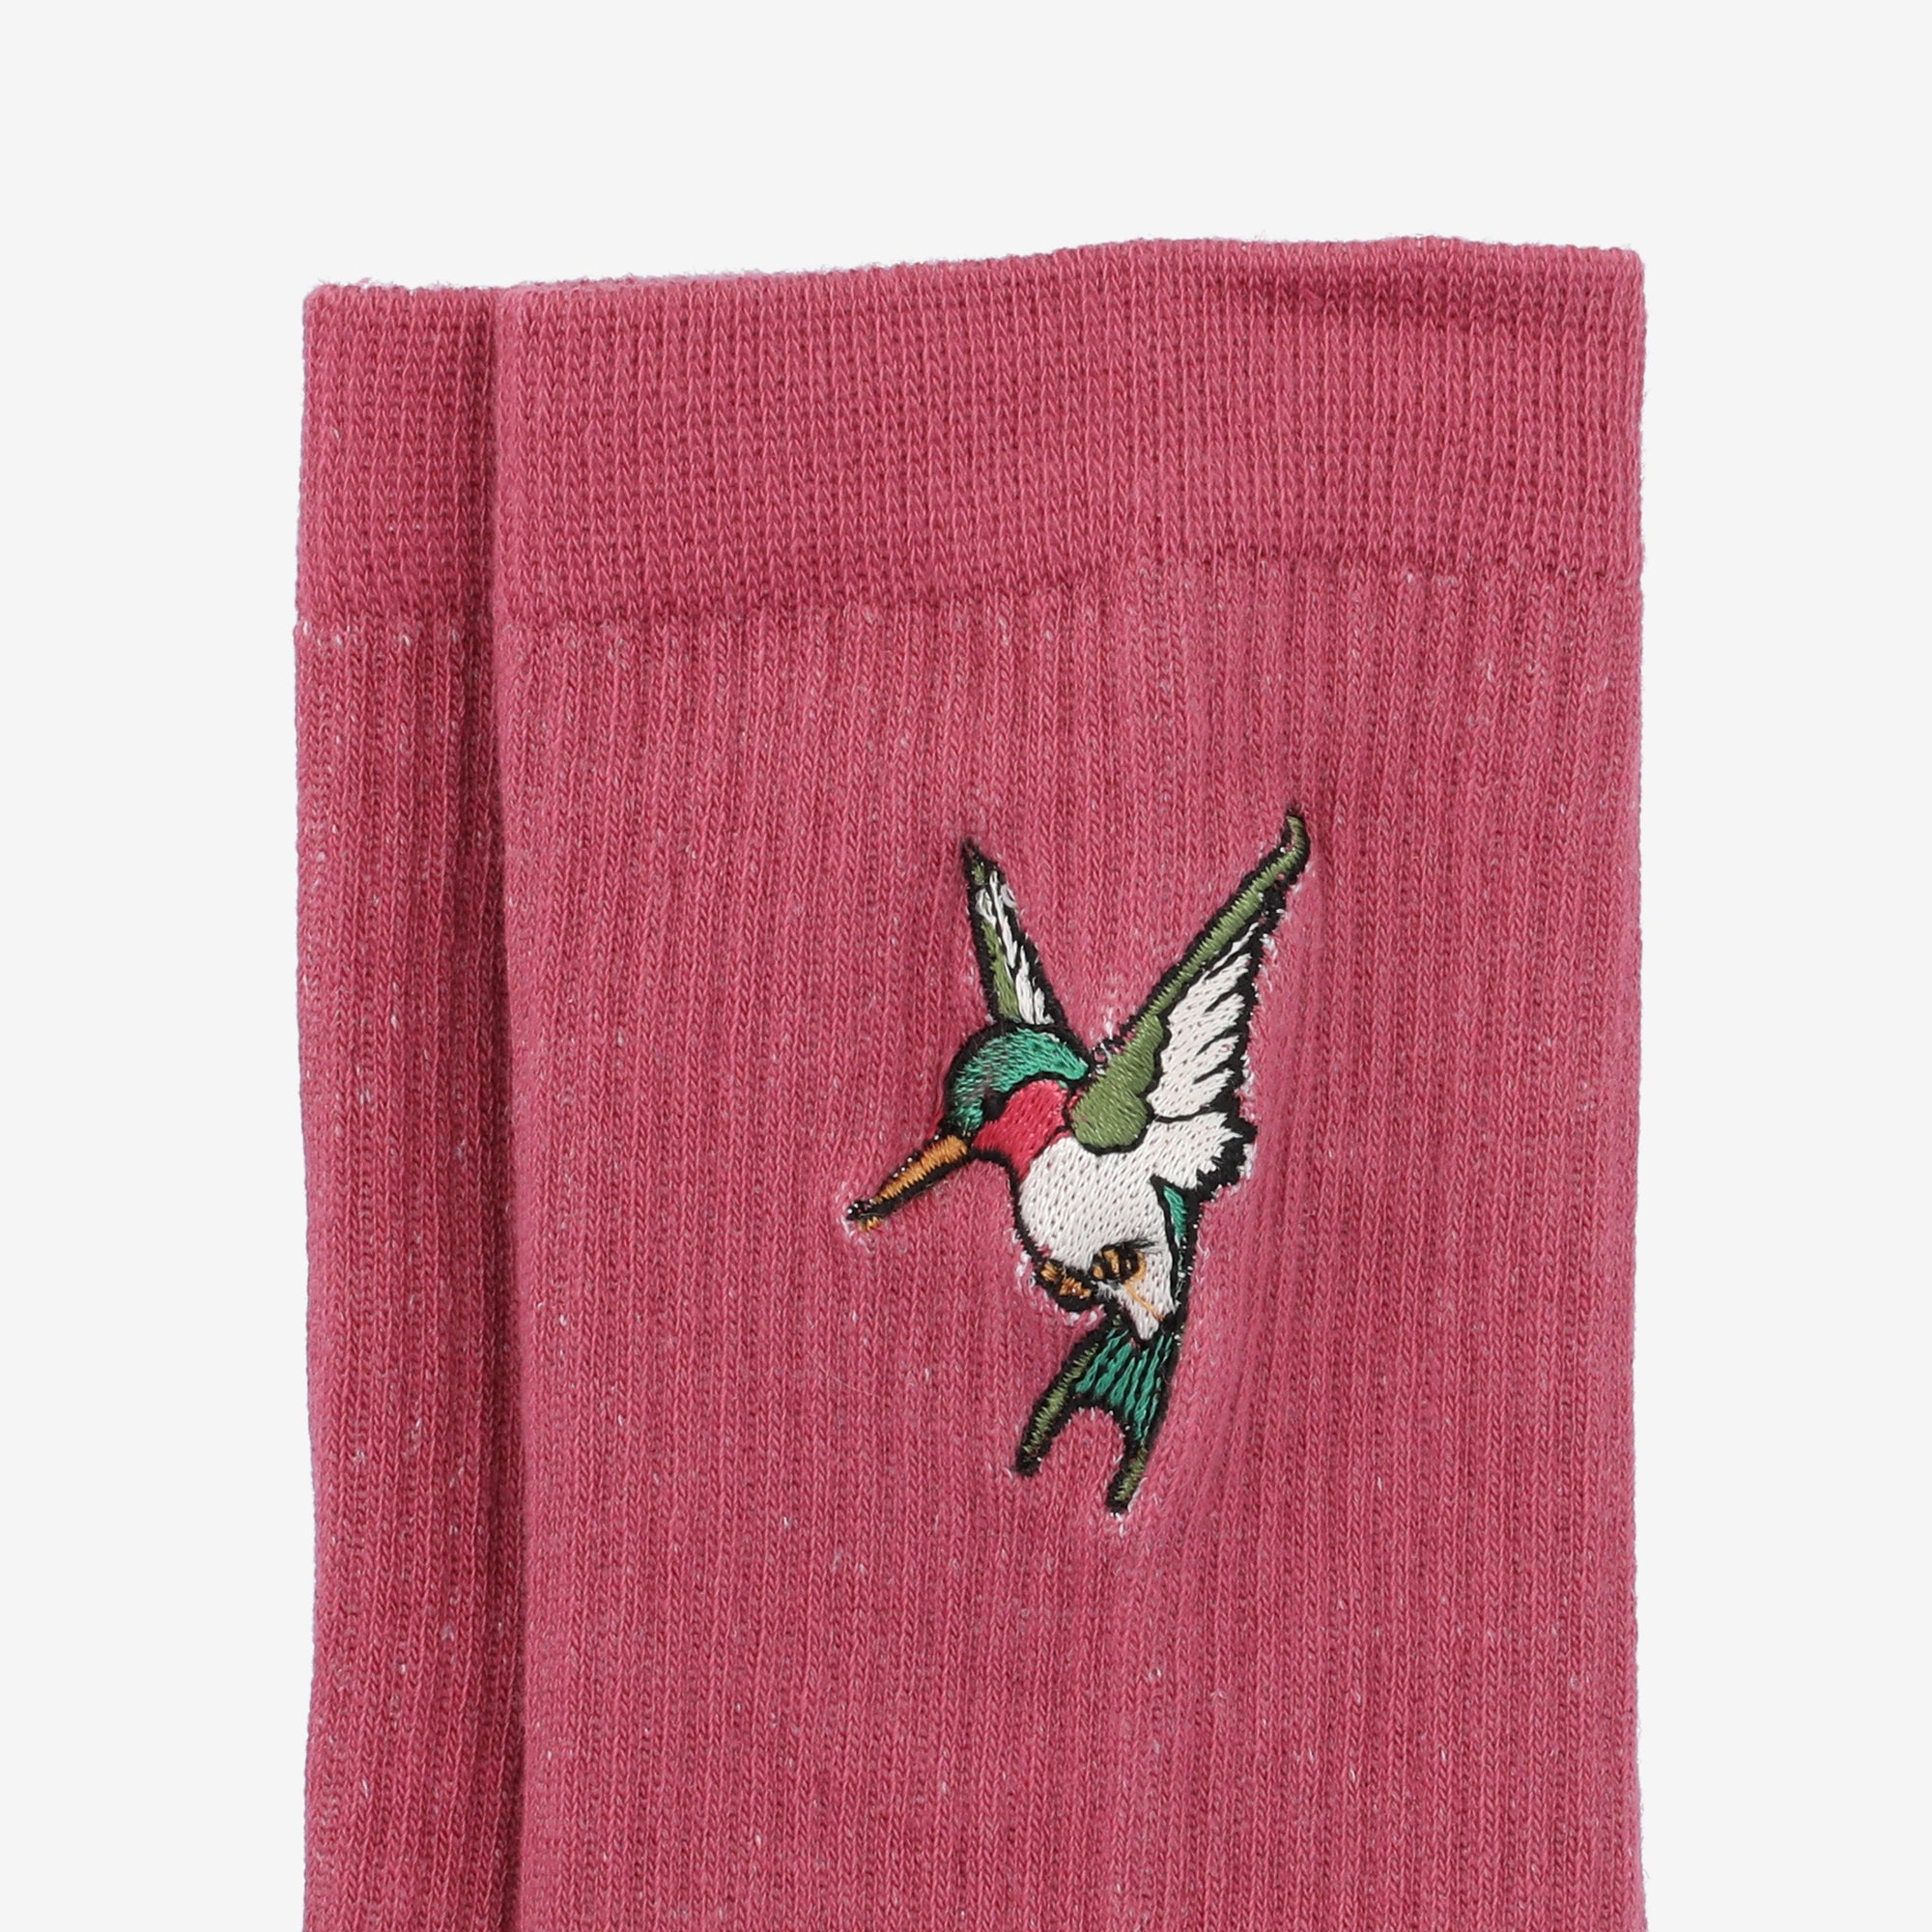 The Crew Sock in Red Hummingbird